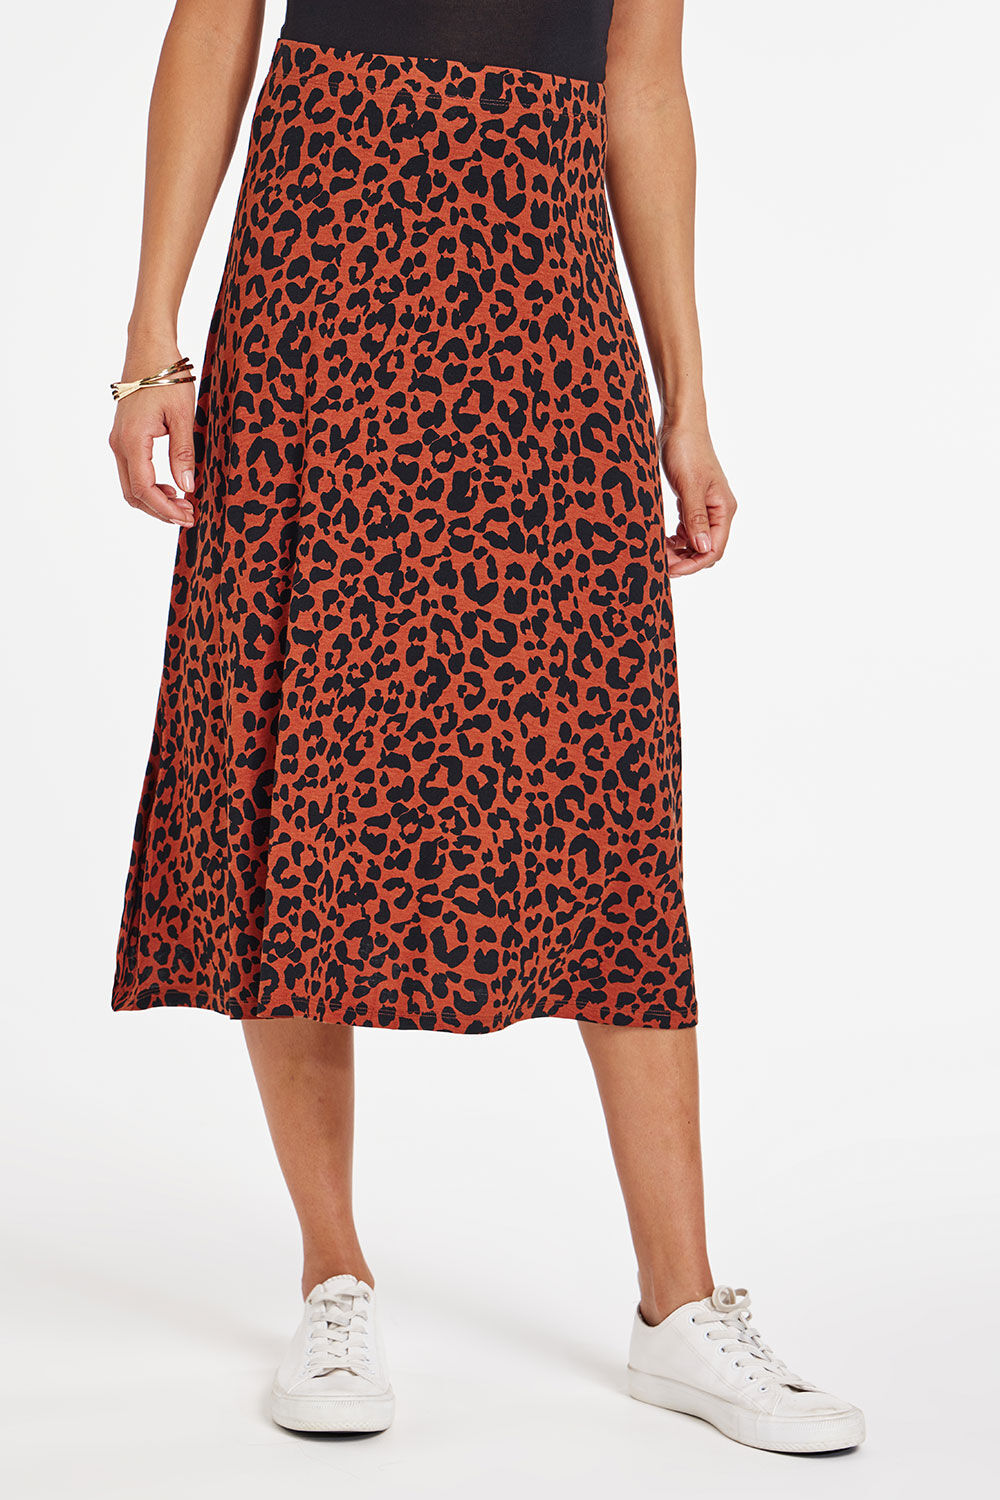 Bonmarche Brown Animal Print Flippy Jersey Elasticated Skirt, Size: 20